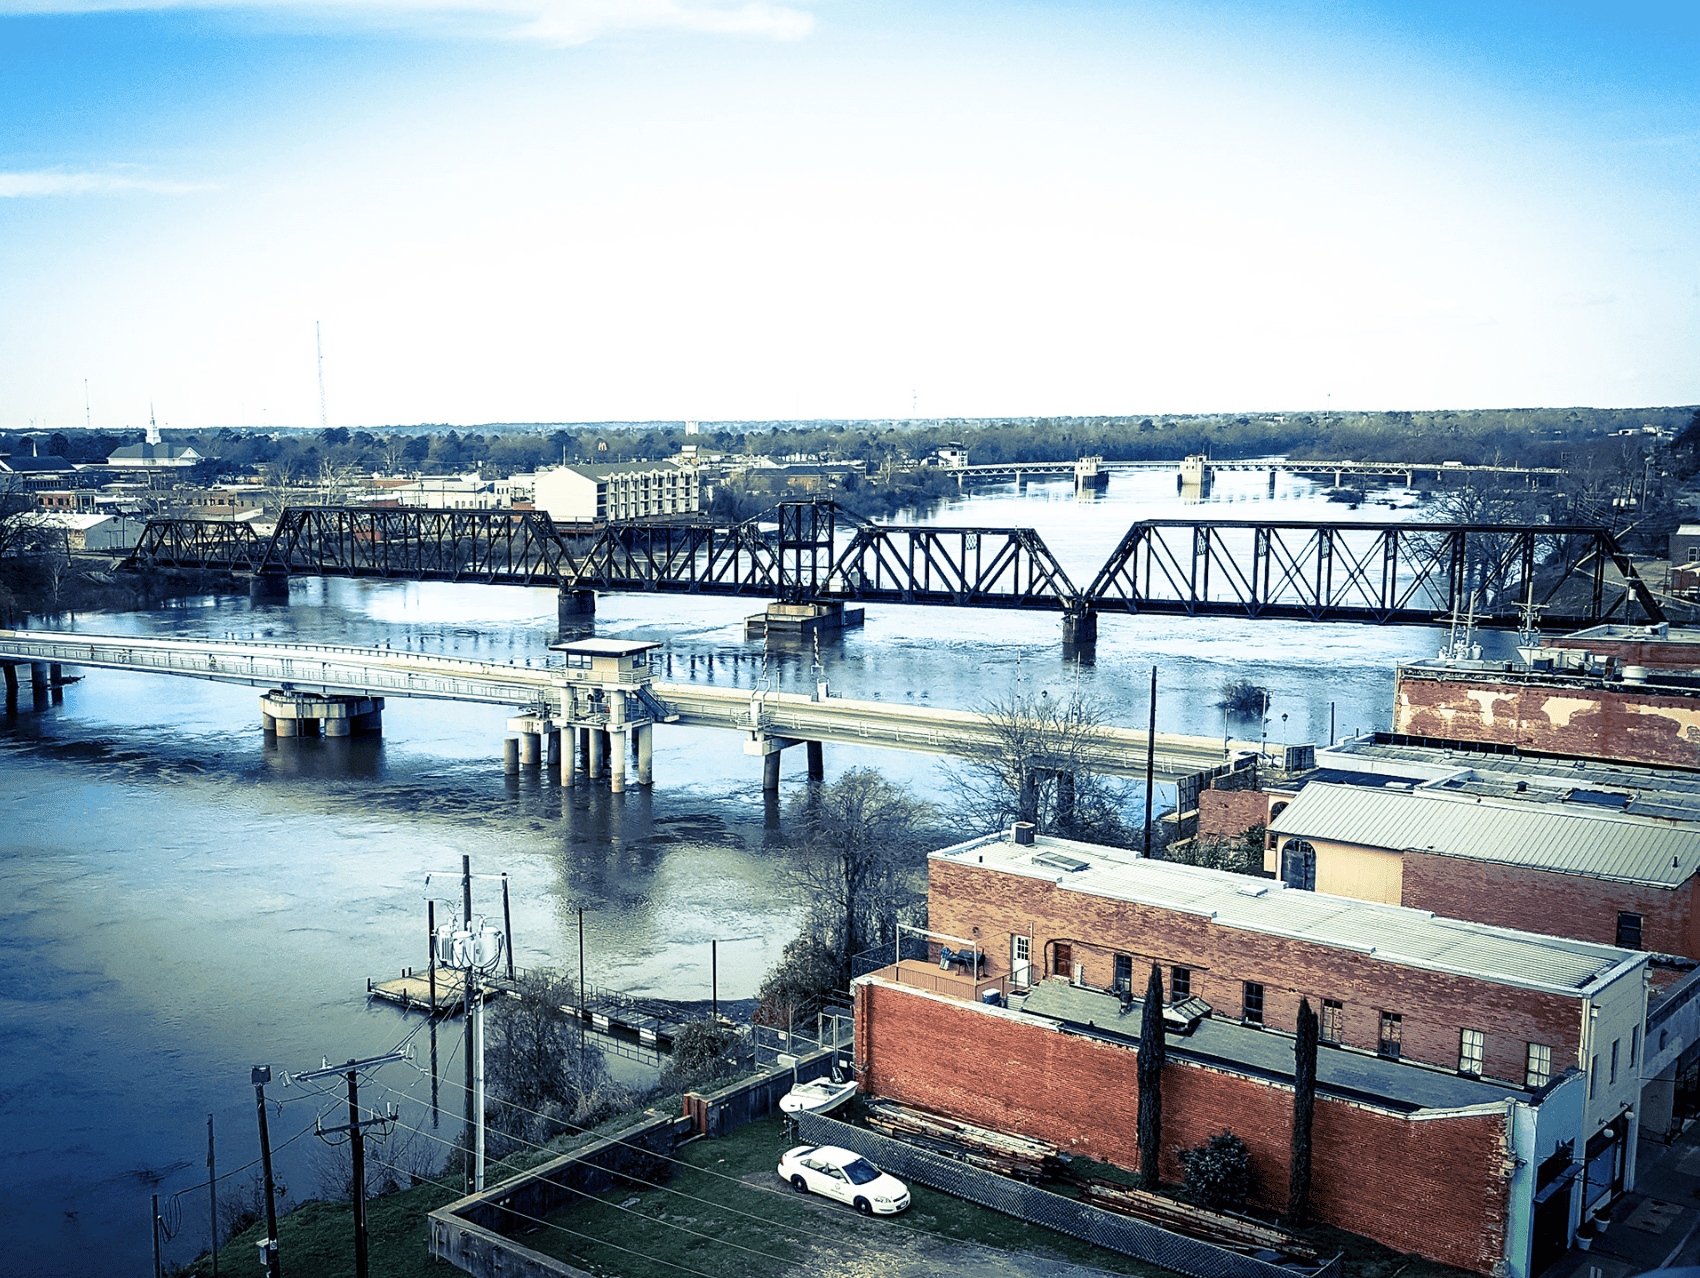 Ouachita River North Louisiana - photography